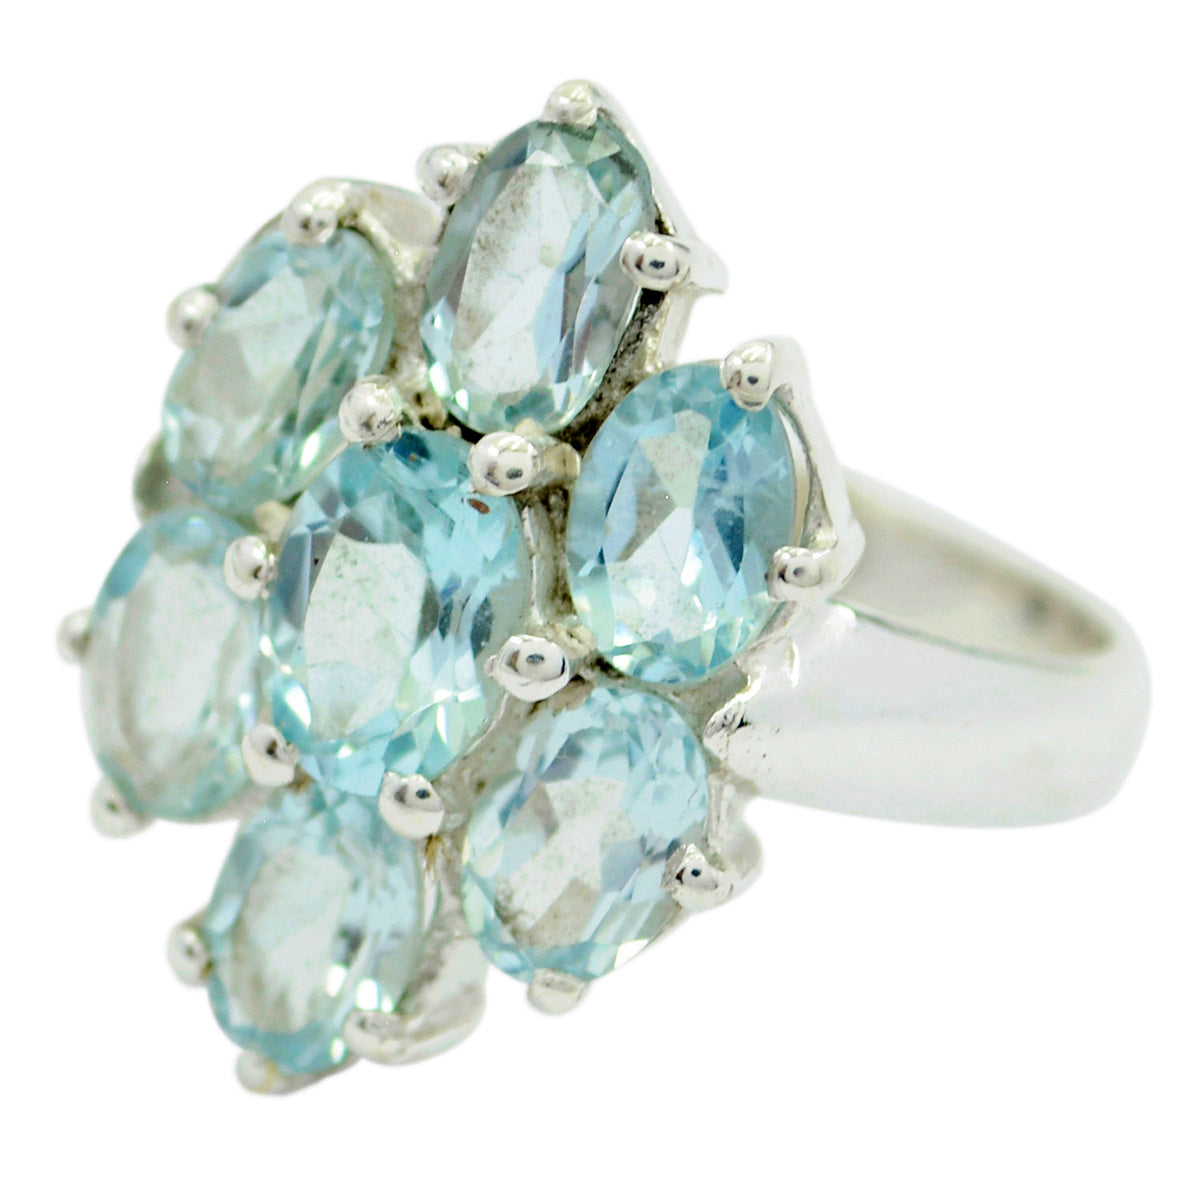 Riyo Supplies Gems Blue Topaz Solid Silver Rings Jewelry Tools